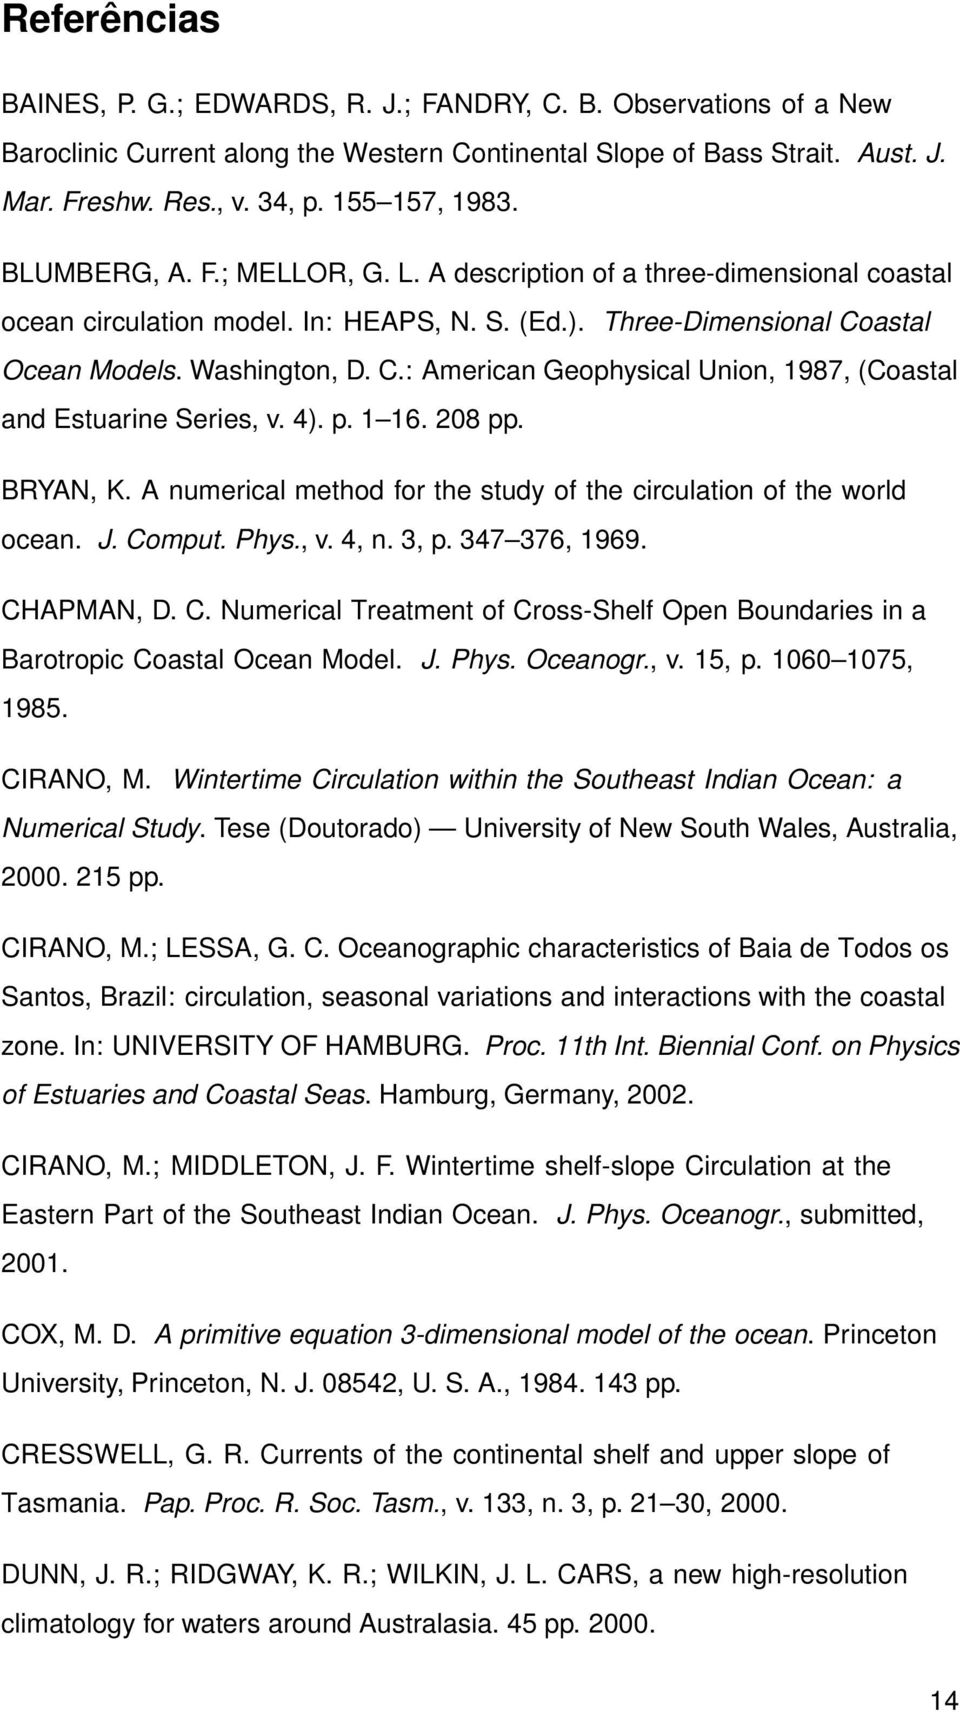 astal Ocean Models. Washington, D. C.: American Geophysical Union, 1987, (Coastal and Estuarine Series, v. 4). p. 1 16. 08 pp. BRYAN, K.